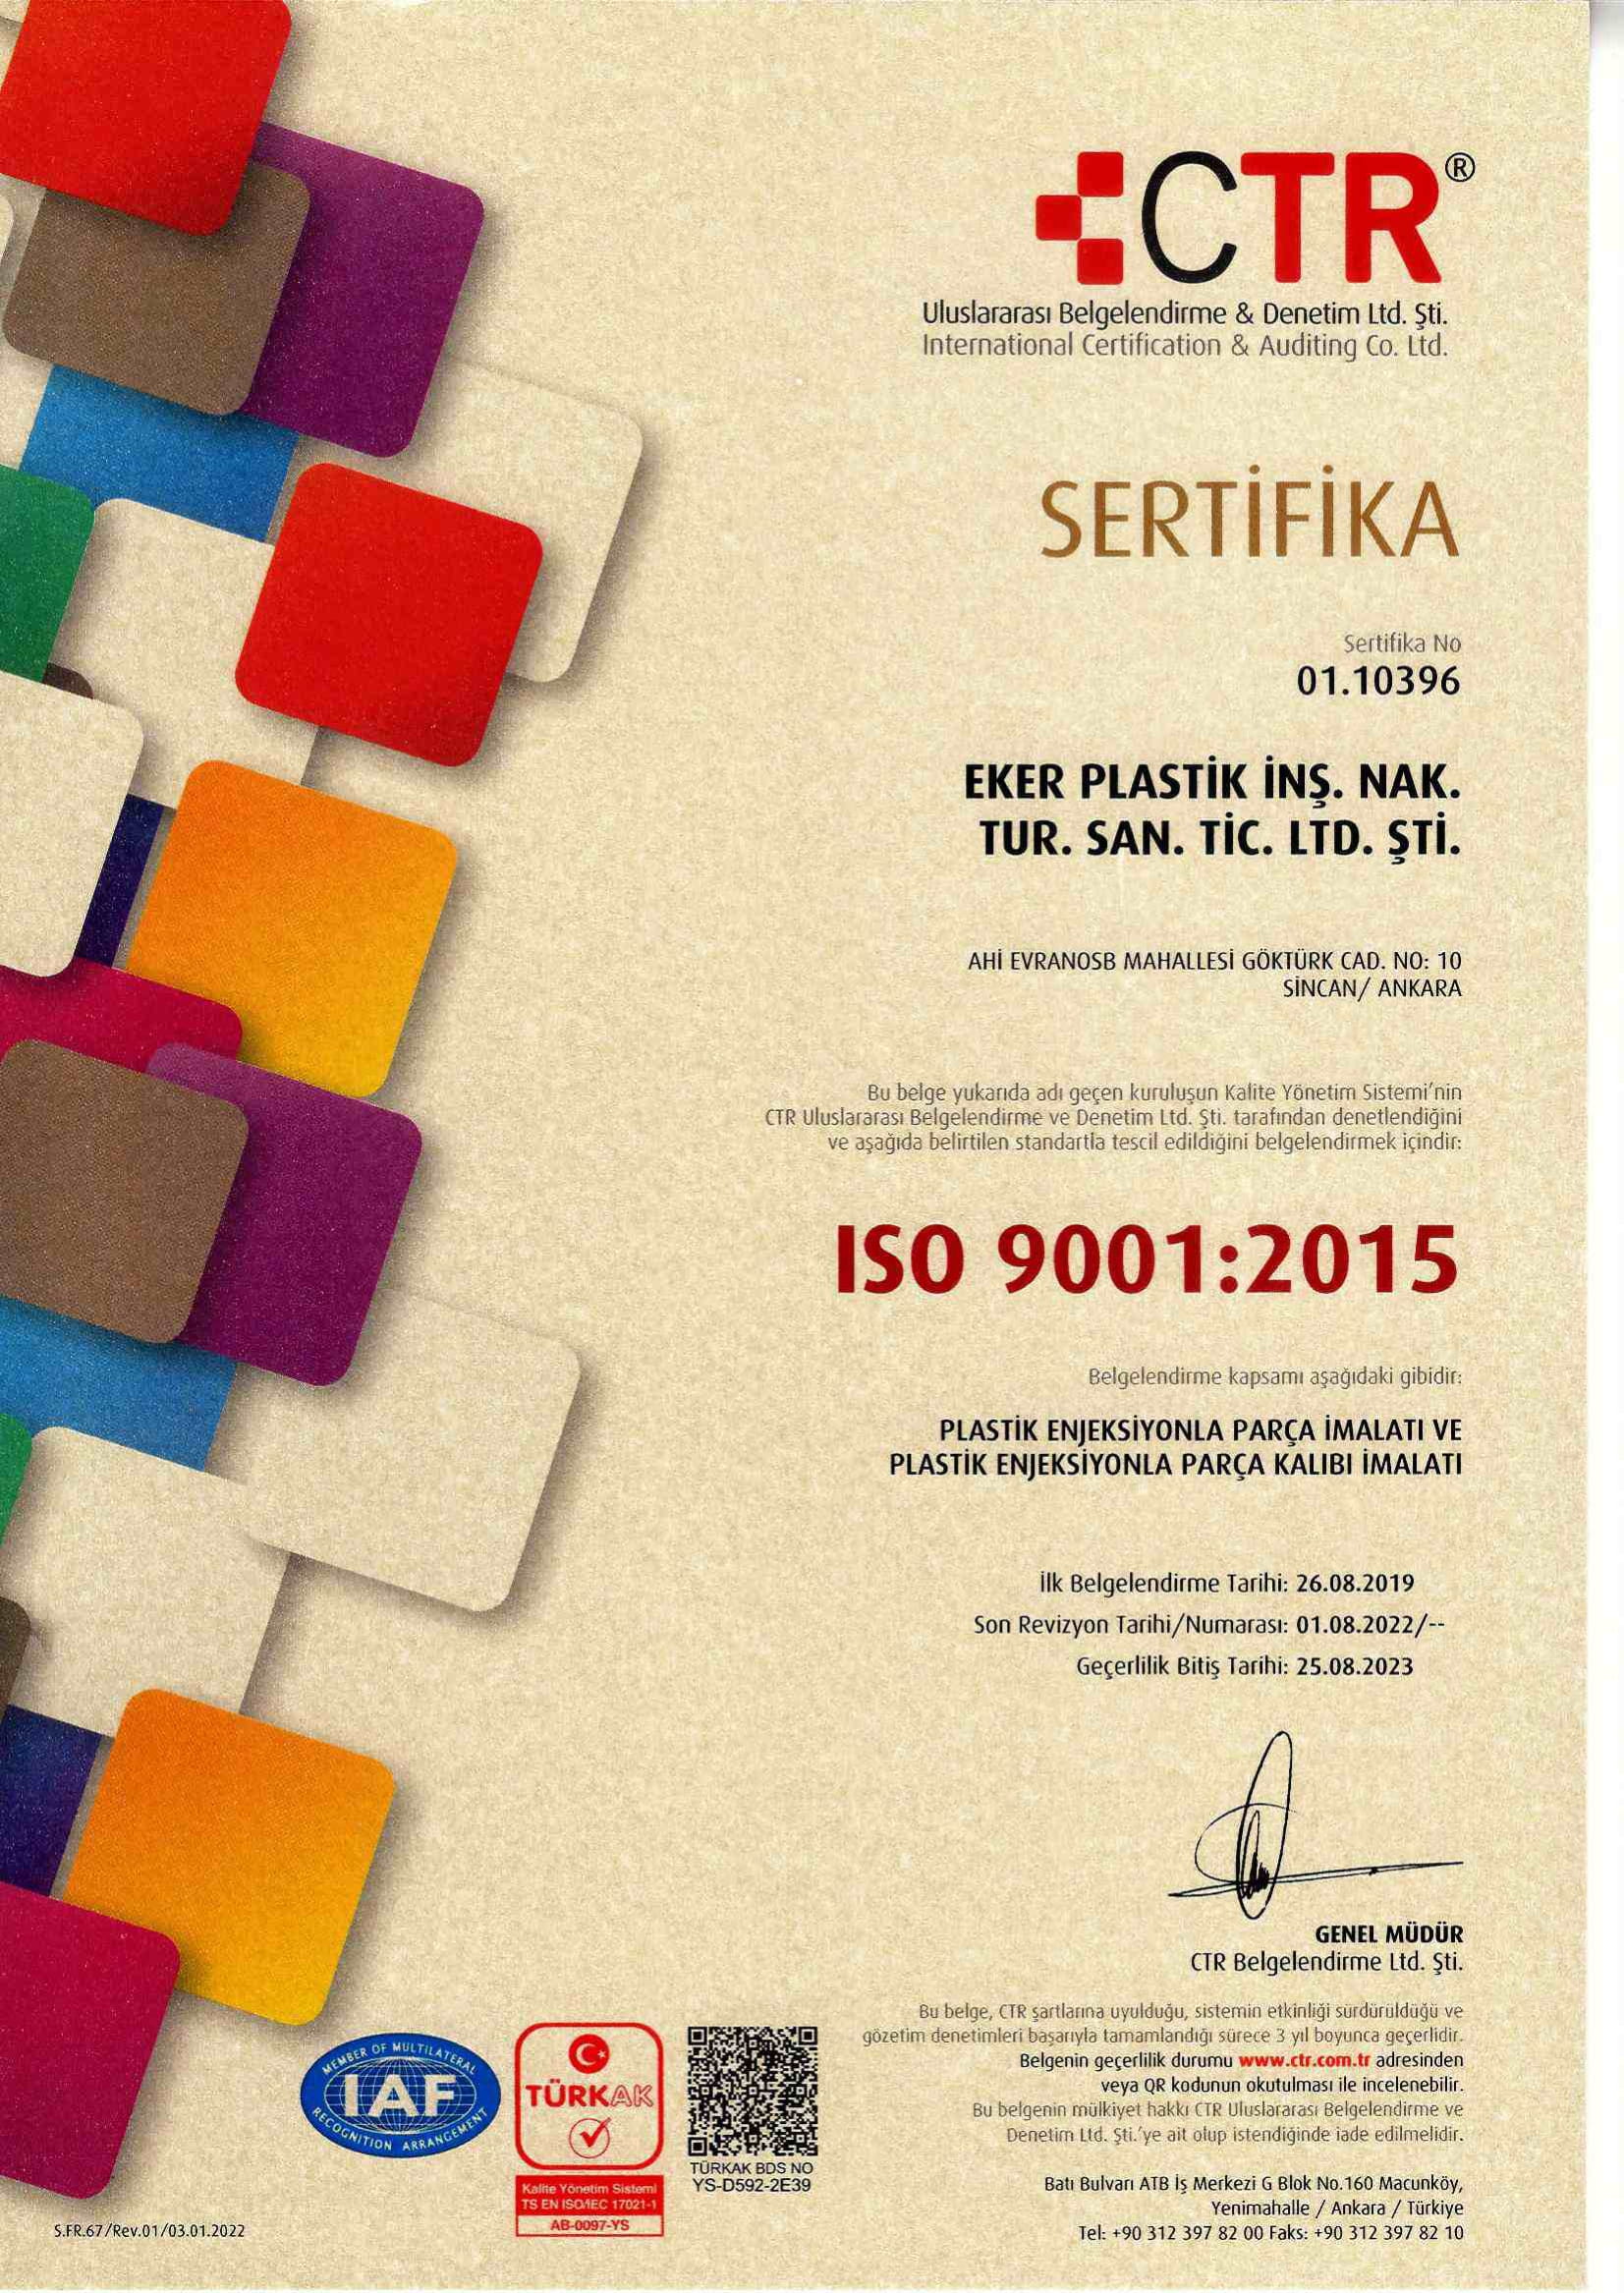 ISO 9001:2015 KALİTE YÖNETİM SİSTEMİ